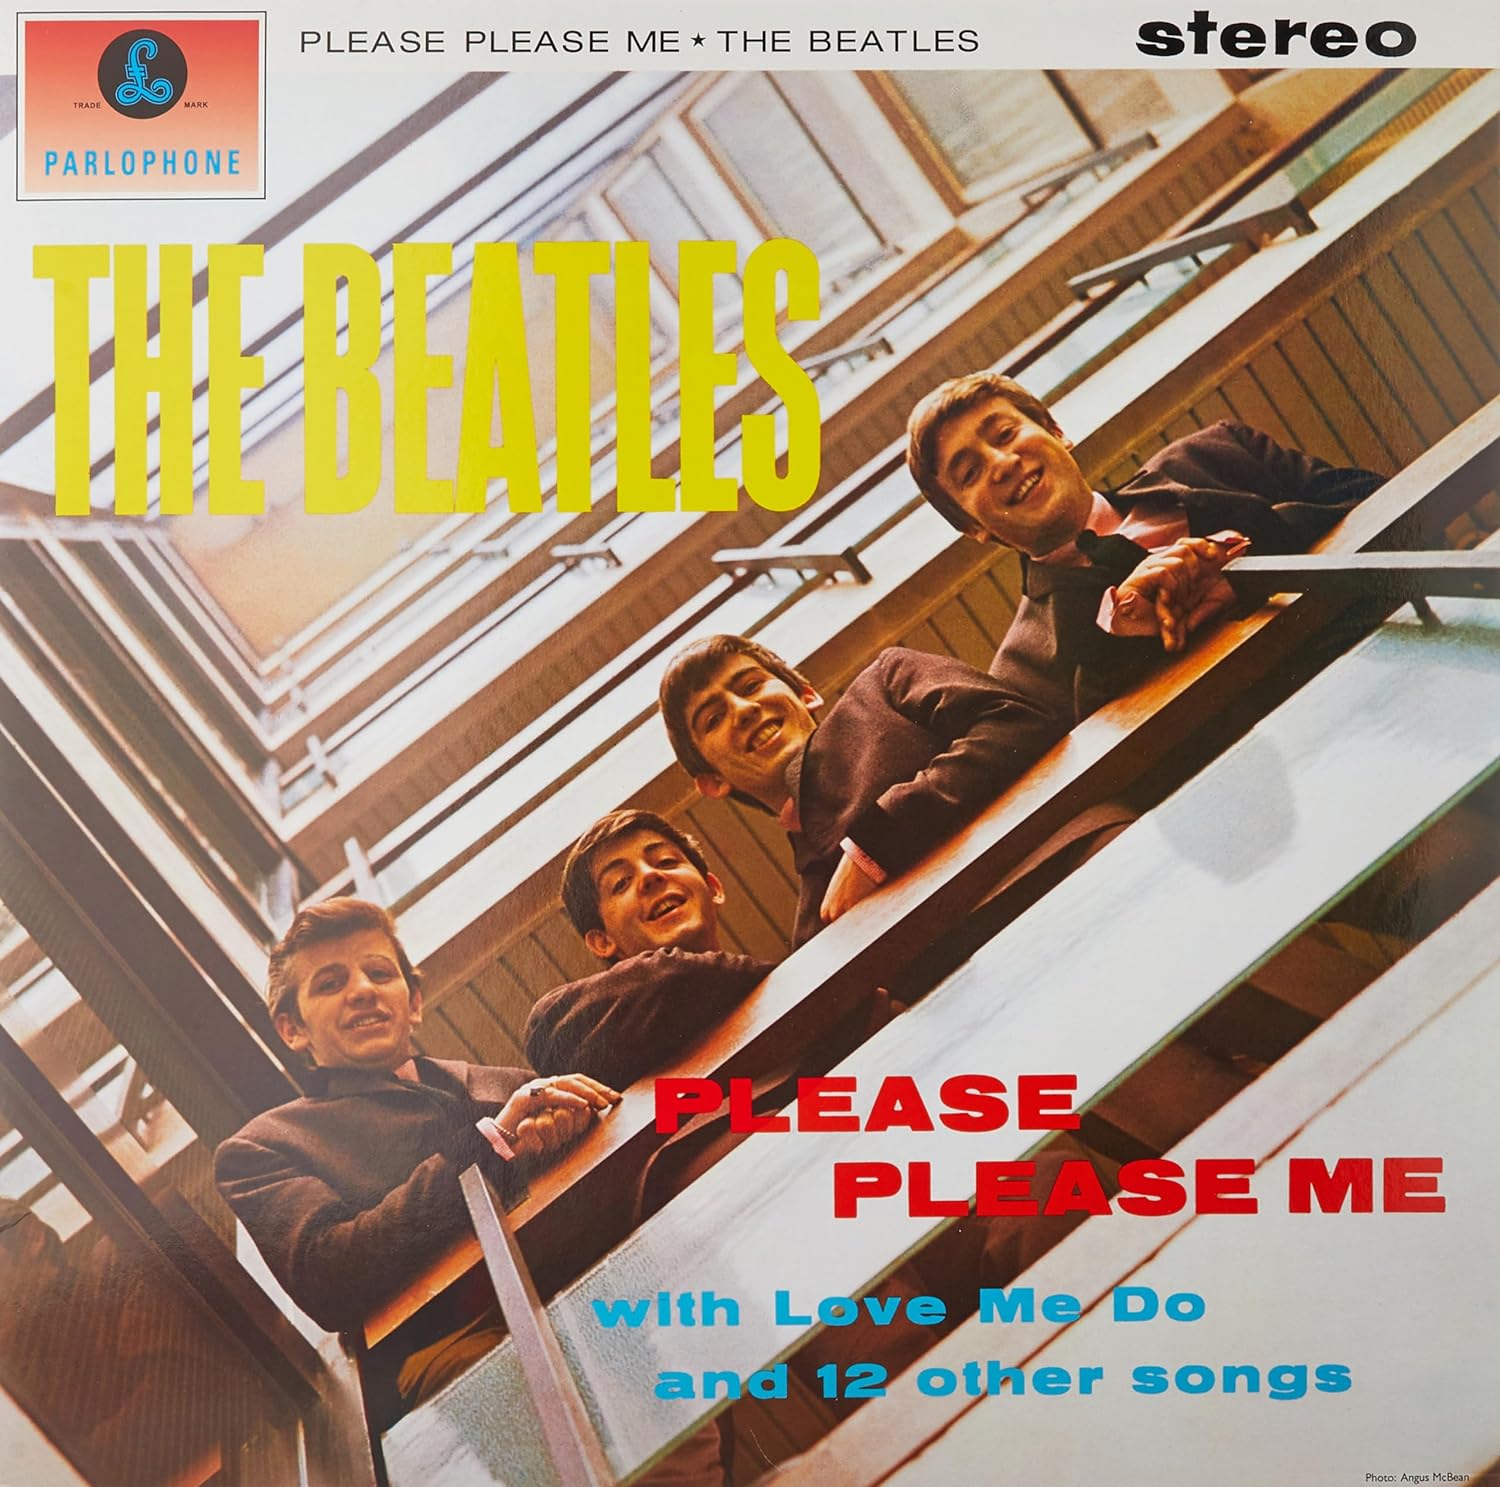 The Beatles - Please Please Me (Stereo Remaster) - LP - 180g Vinyl